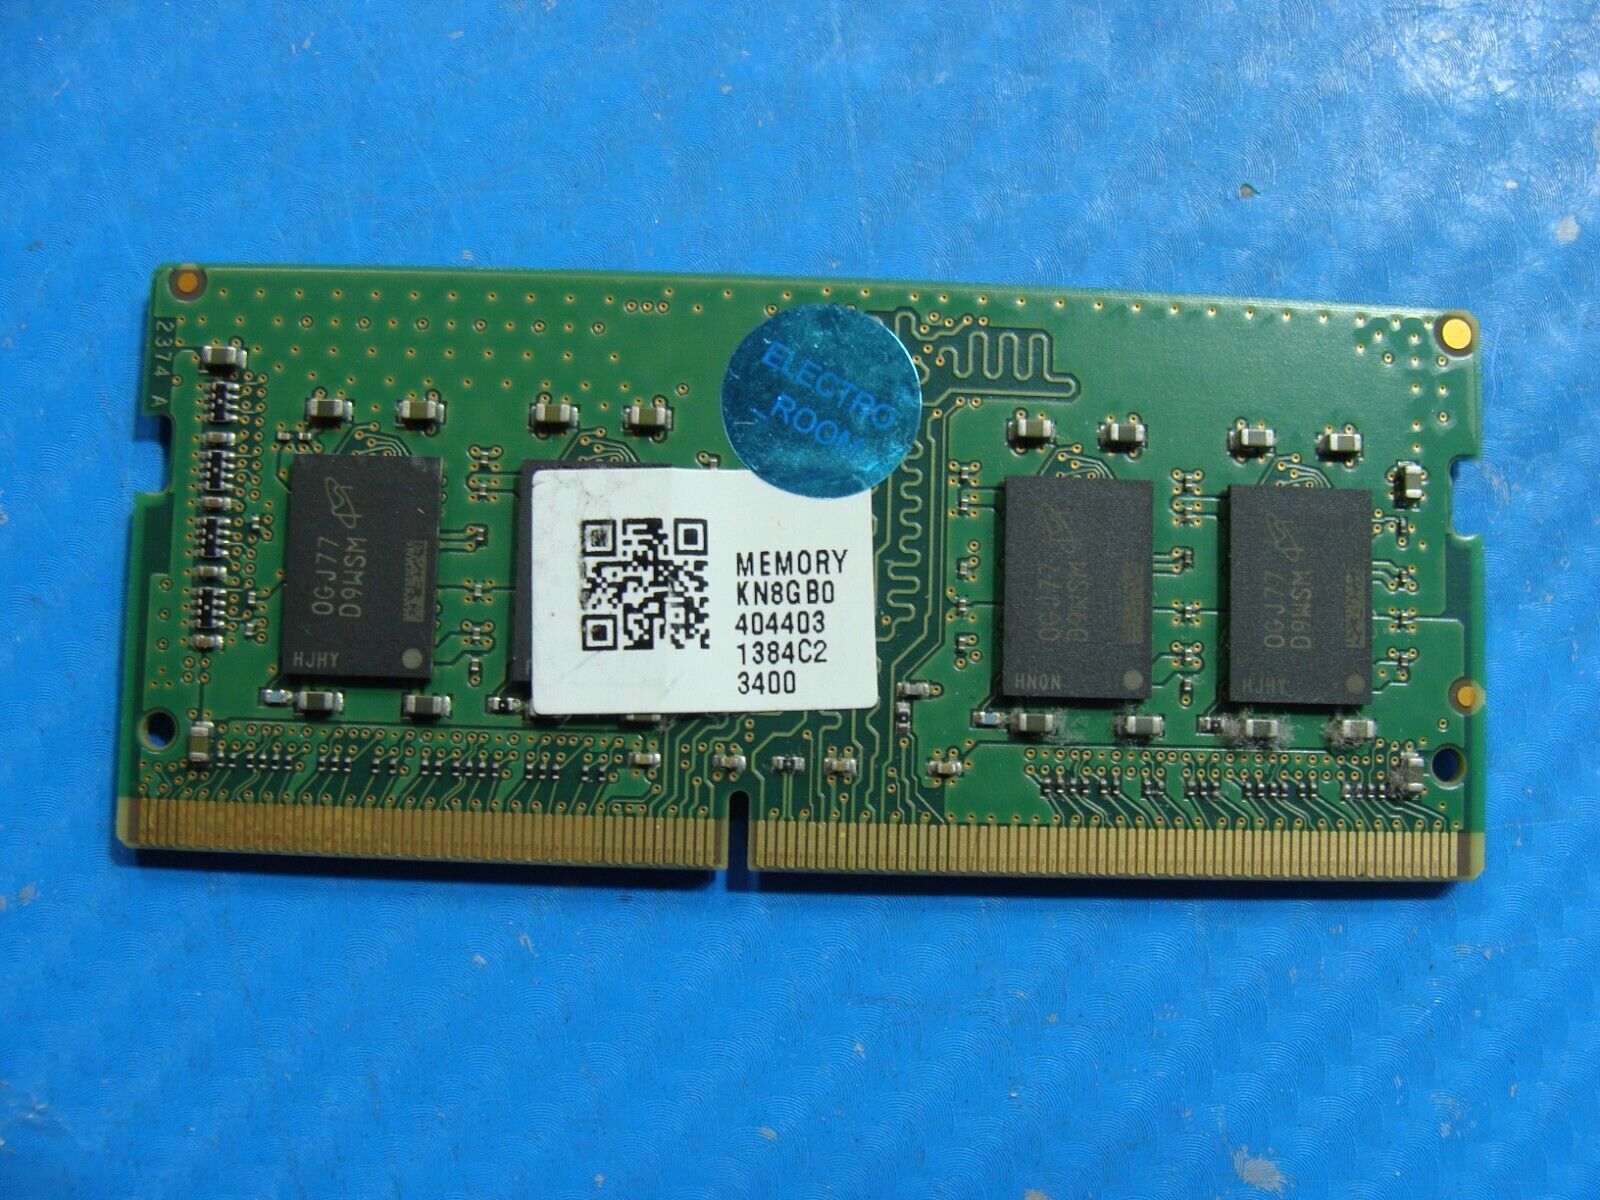 HP 15m-ed0013dx Micron 8GB 1Rx8 PC4-3200A SO-DIMM Memory RAM MTA8ATF1G64HZ-3G2J1